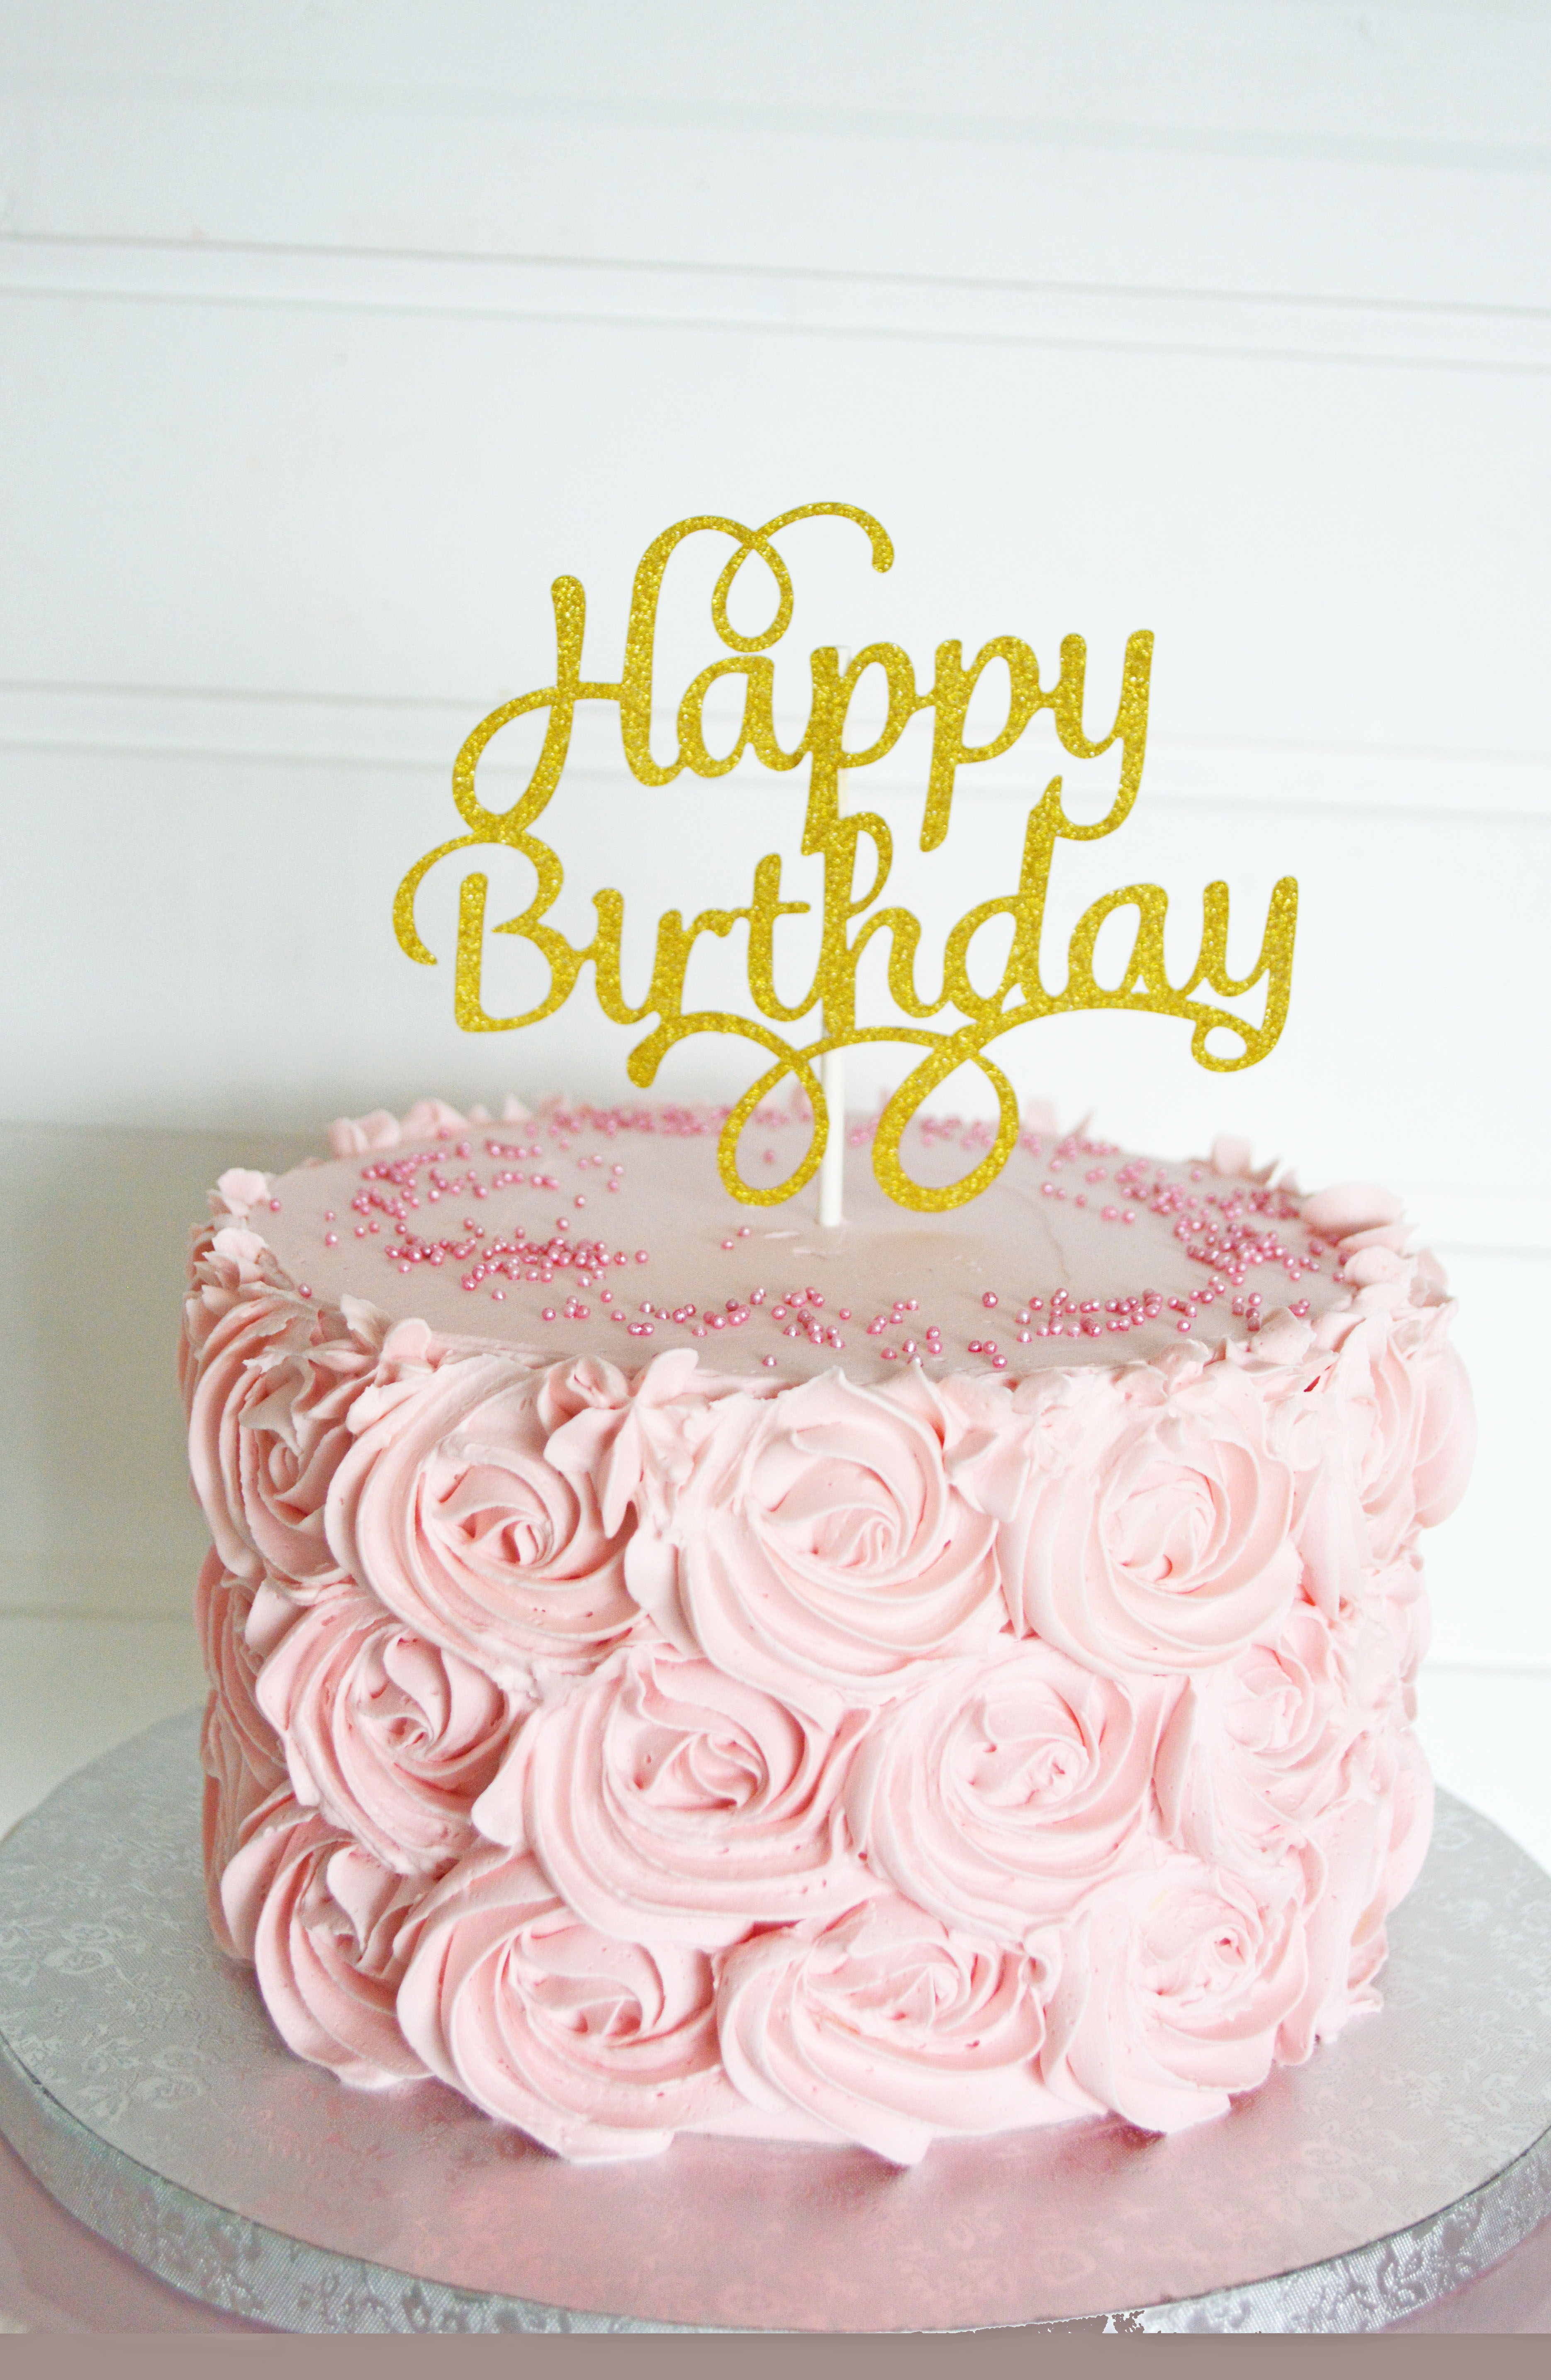 Happy-birthday-cake-Bienne-